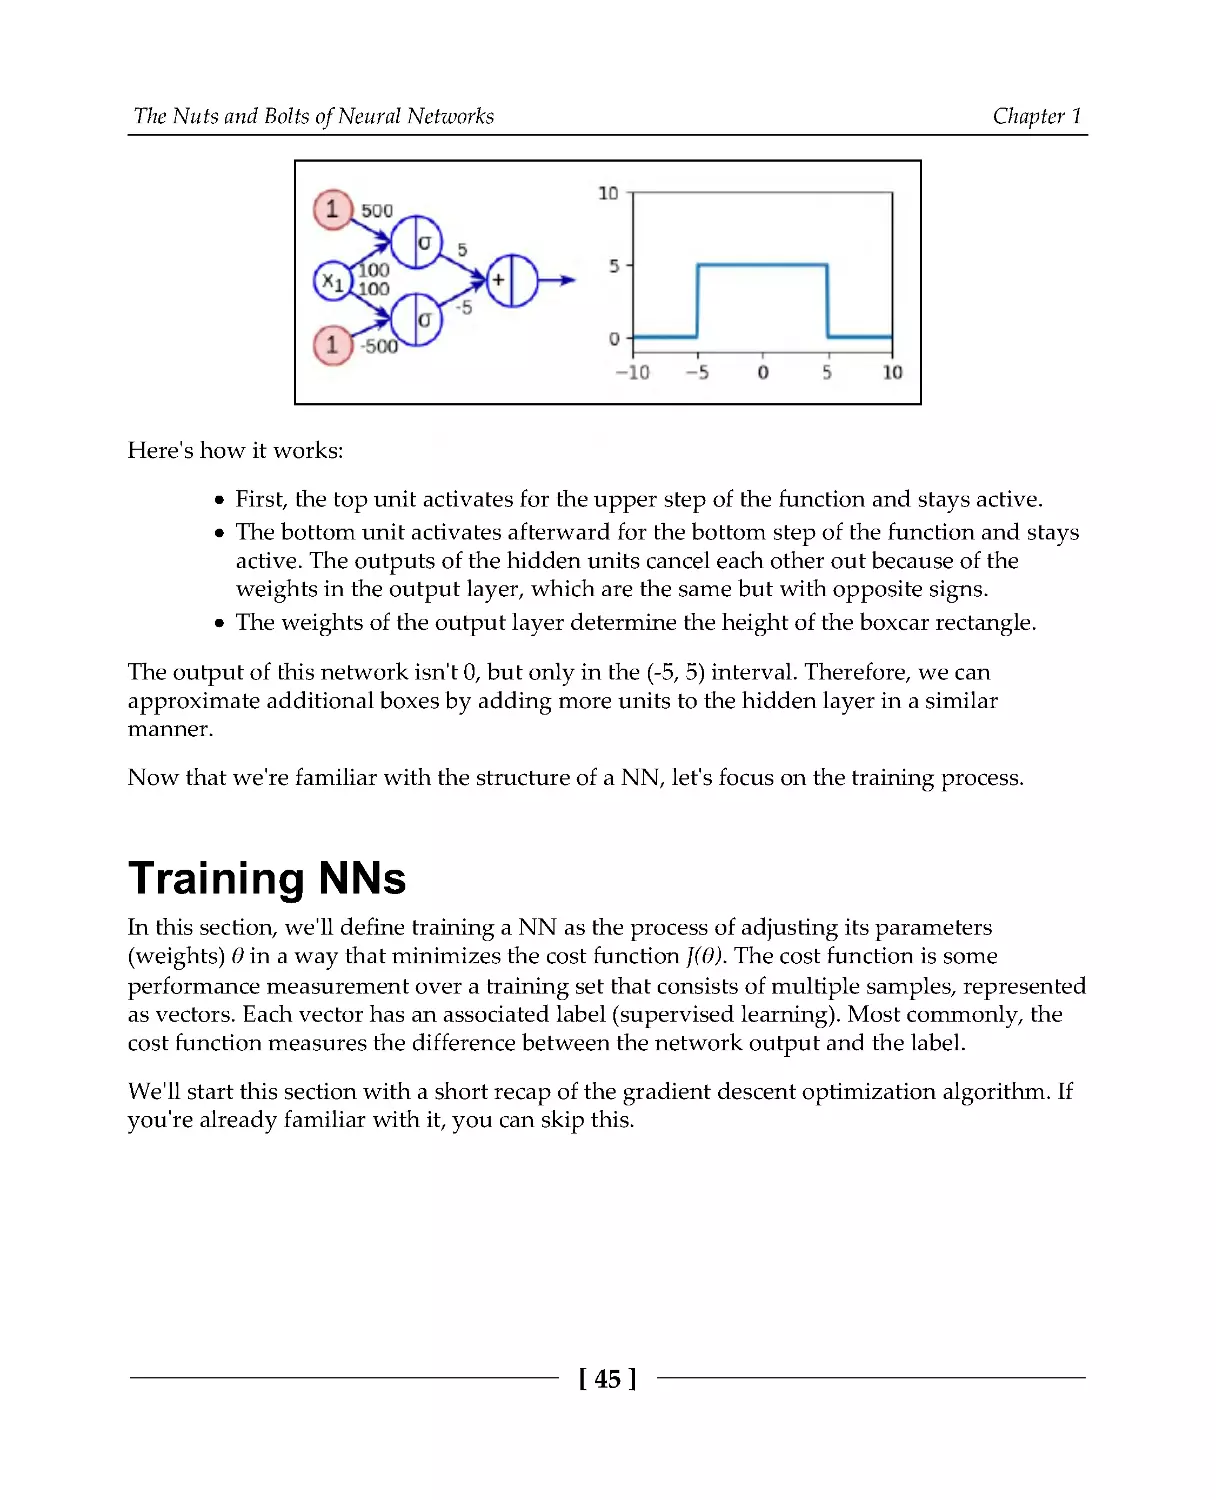 Training NNs